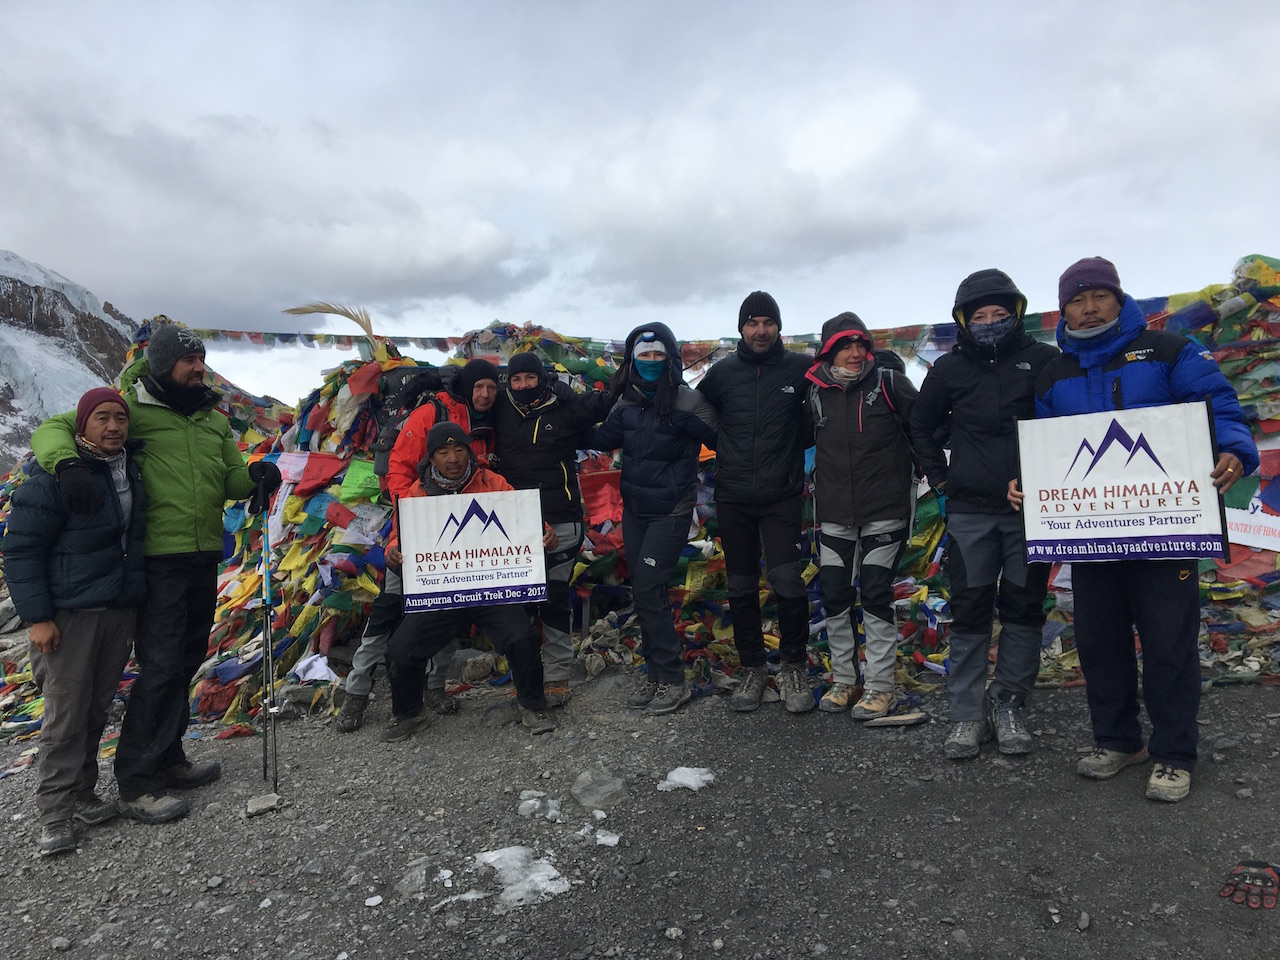 Thorang La Pass (5,416m) Annapurna Circuit Trek